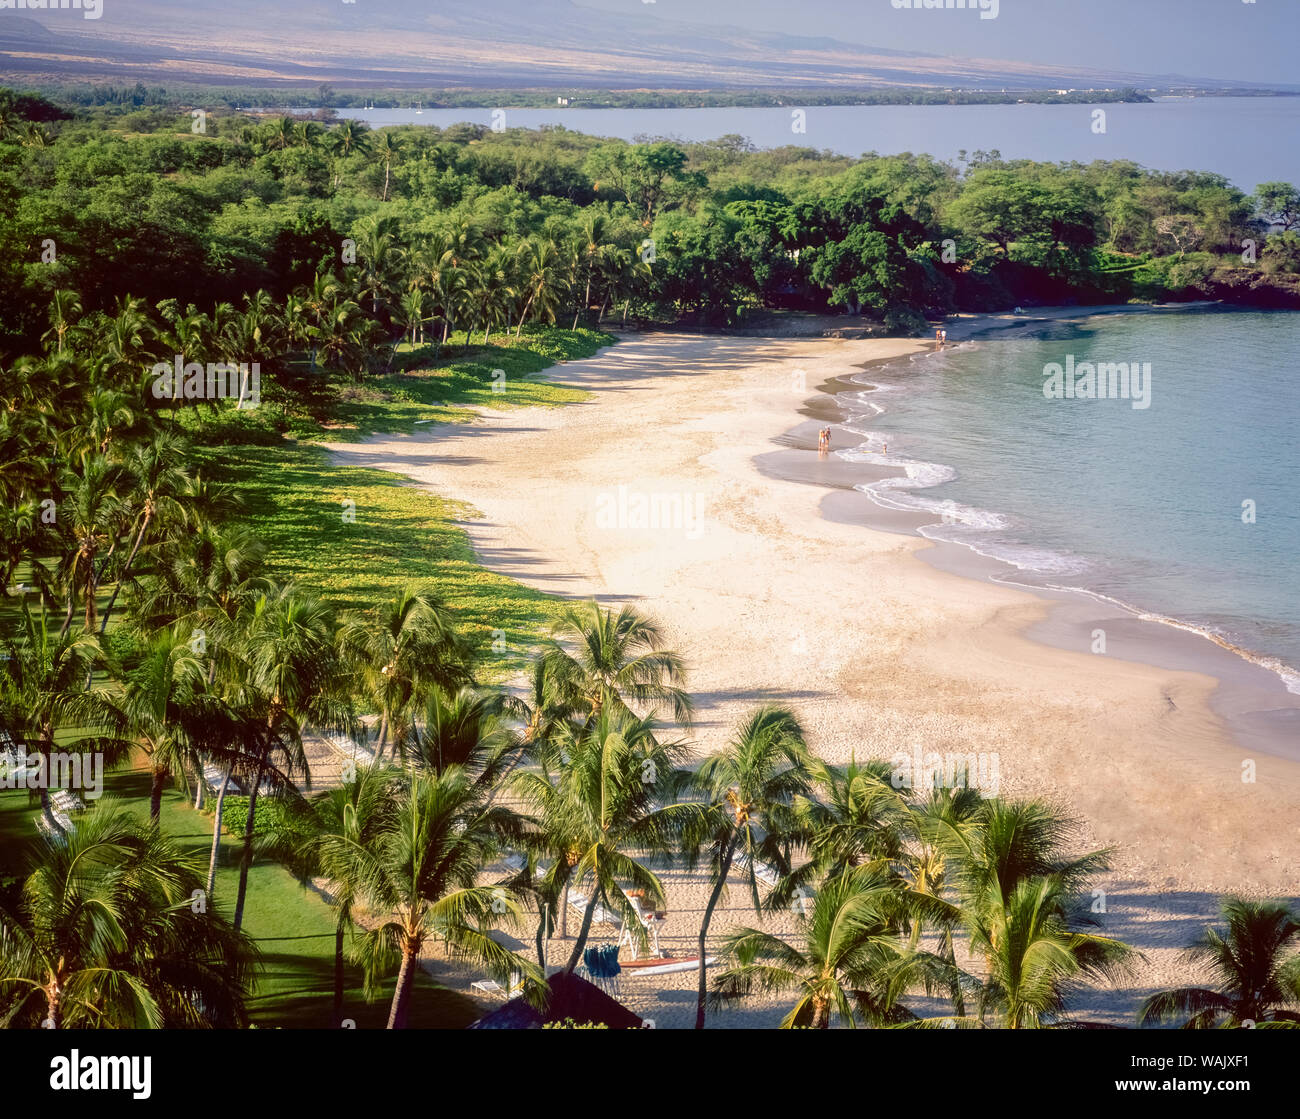 One of the top beaches in the world. Kaunaoa Bay, Big Island, Hawaii Stock Photo